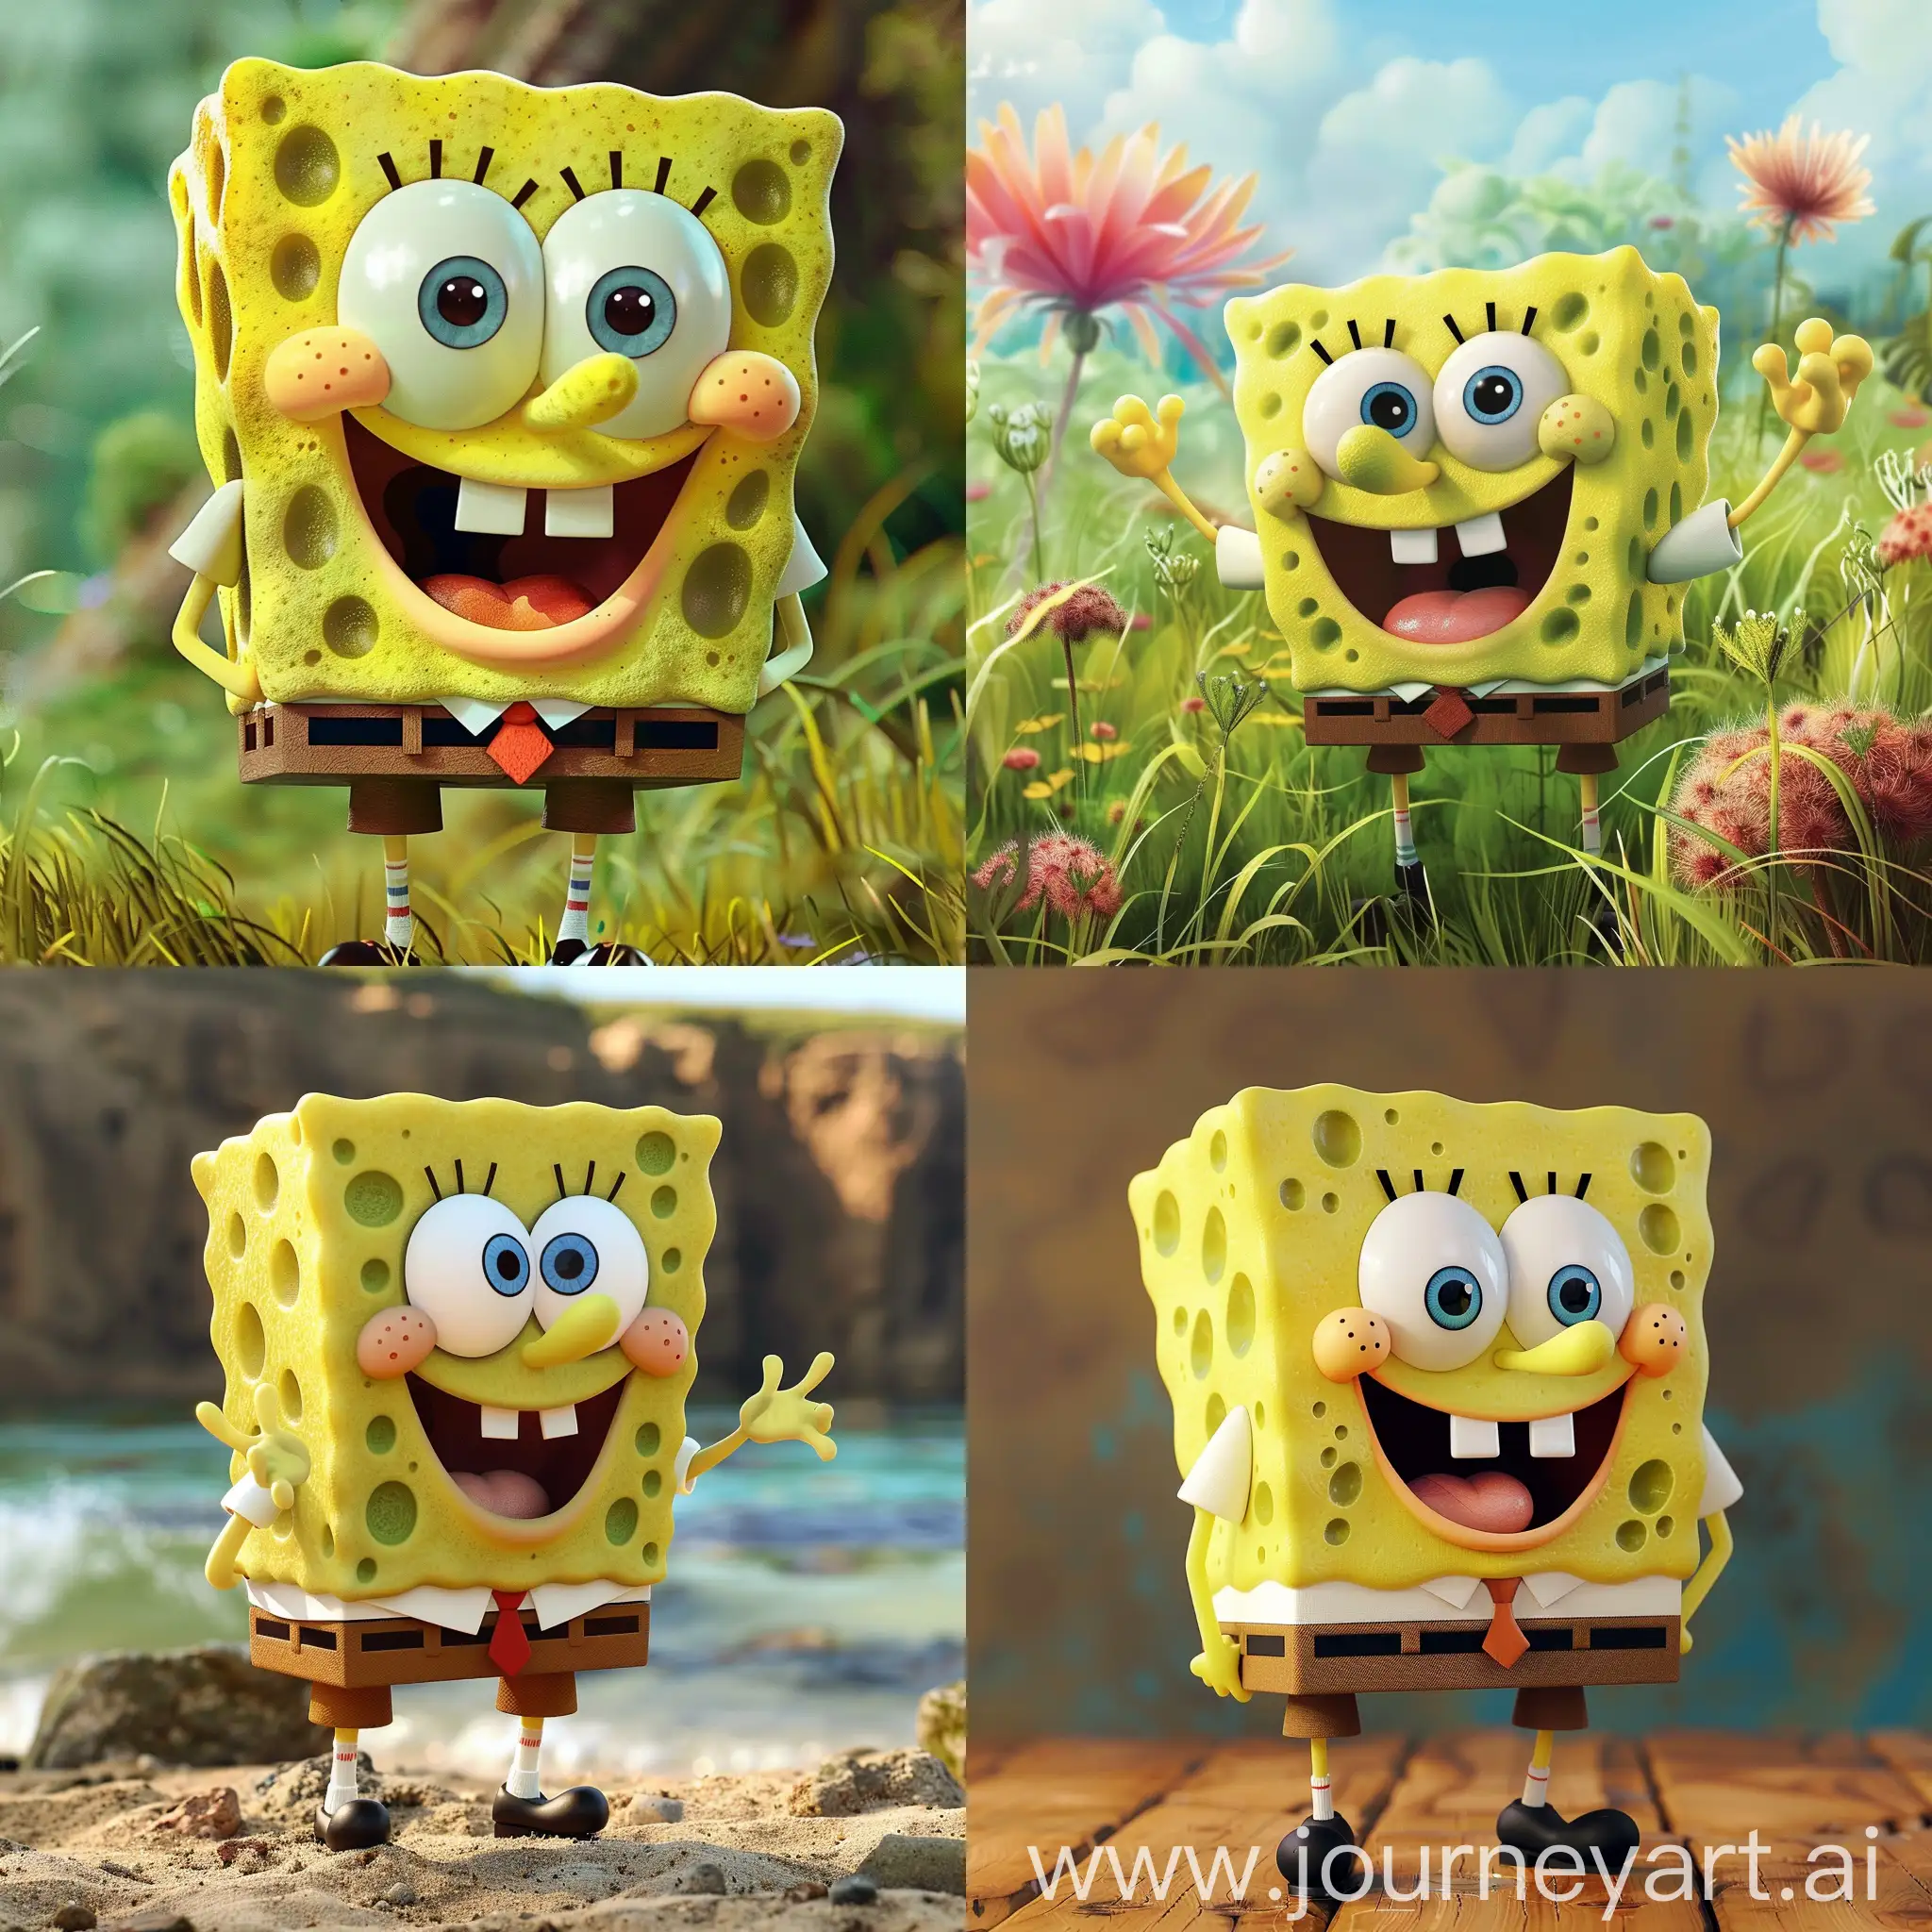 SpongeBob-SquarePants-and-Friends-Underwater-Adventure